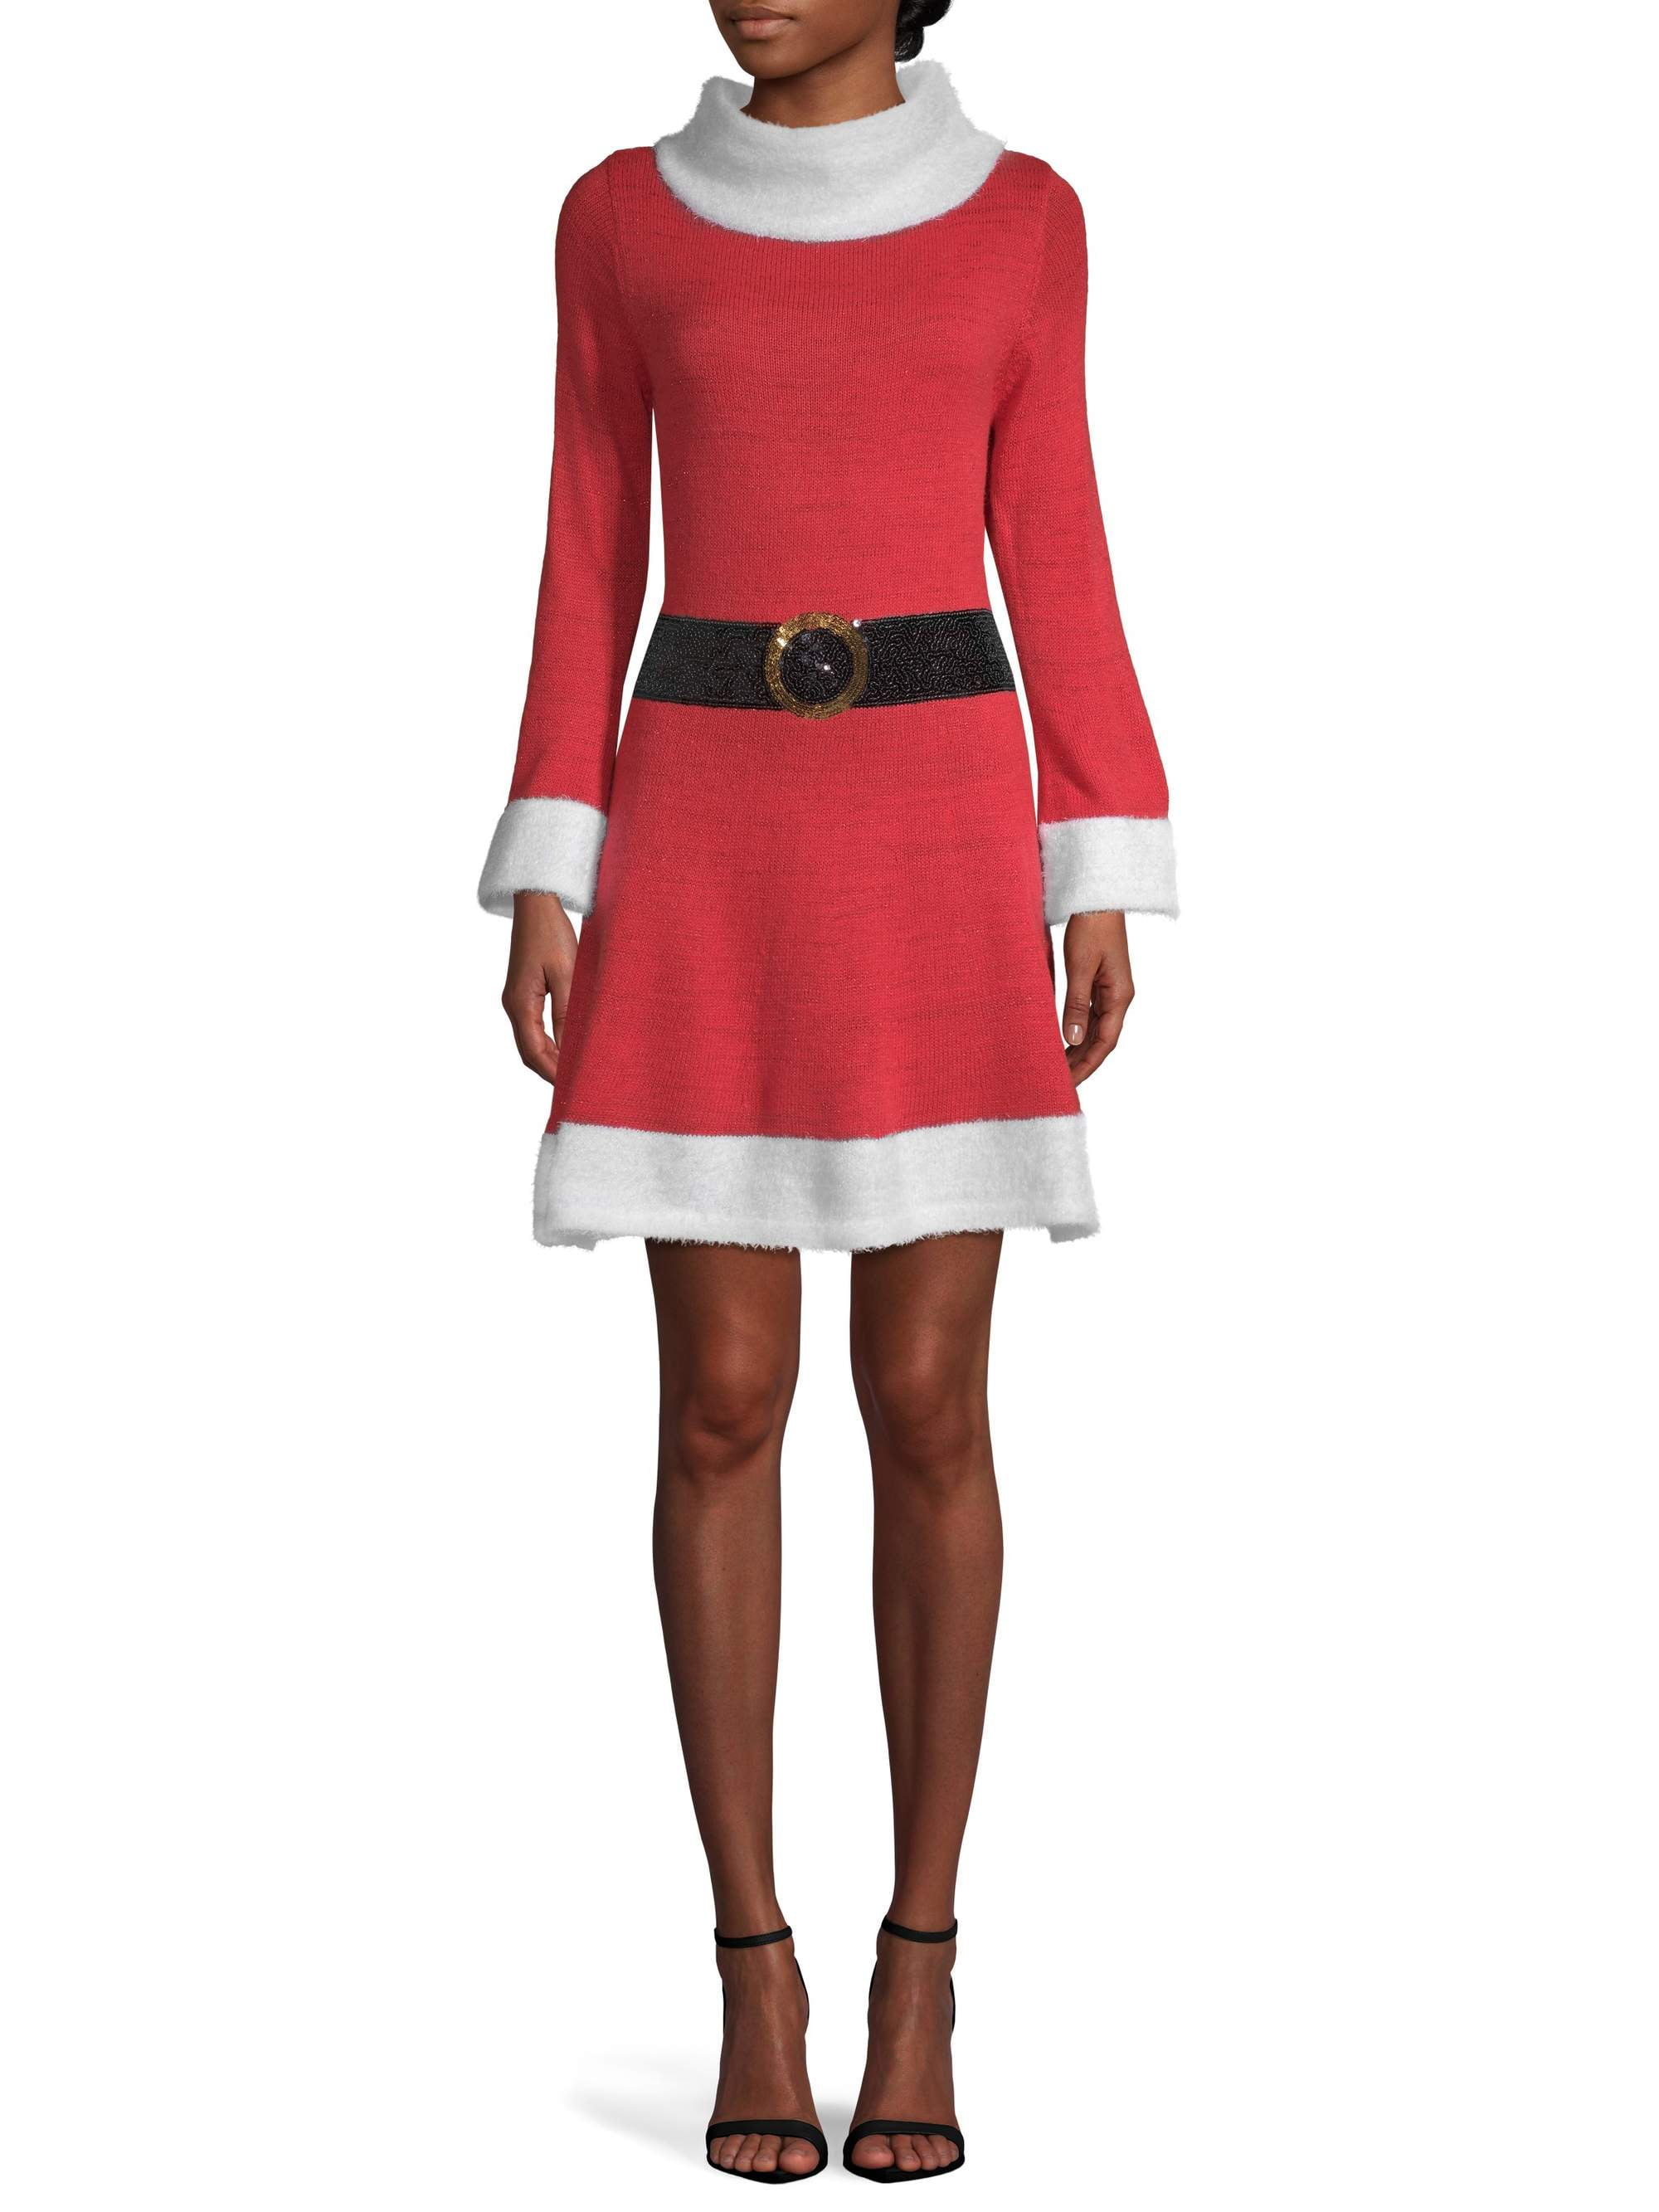 Santa Ugly Christmas Sweater Dress 